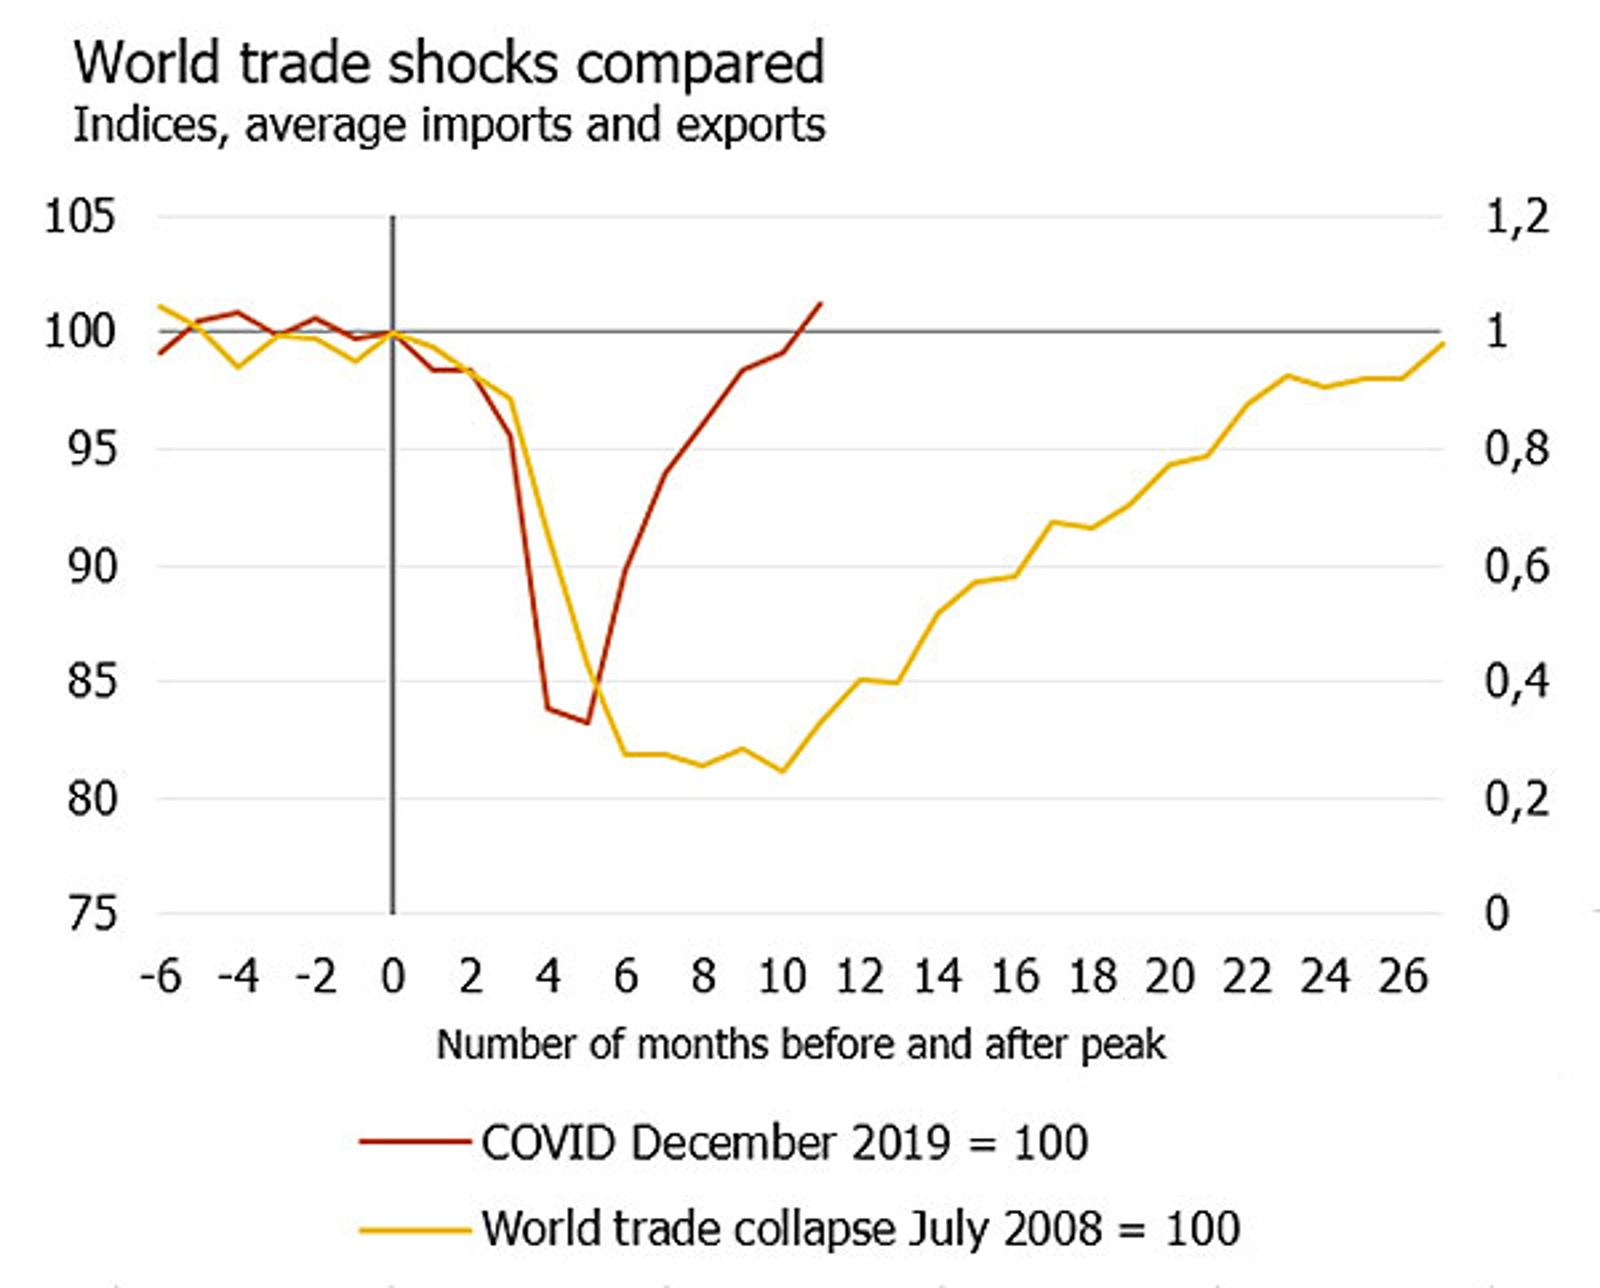 World trade shocks compared